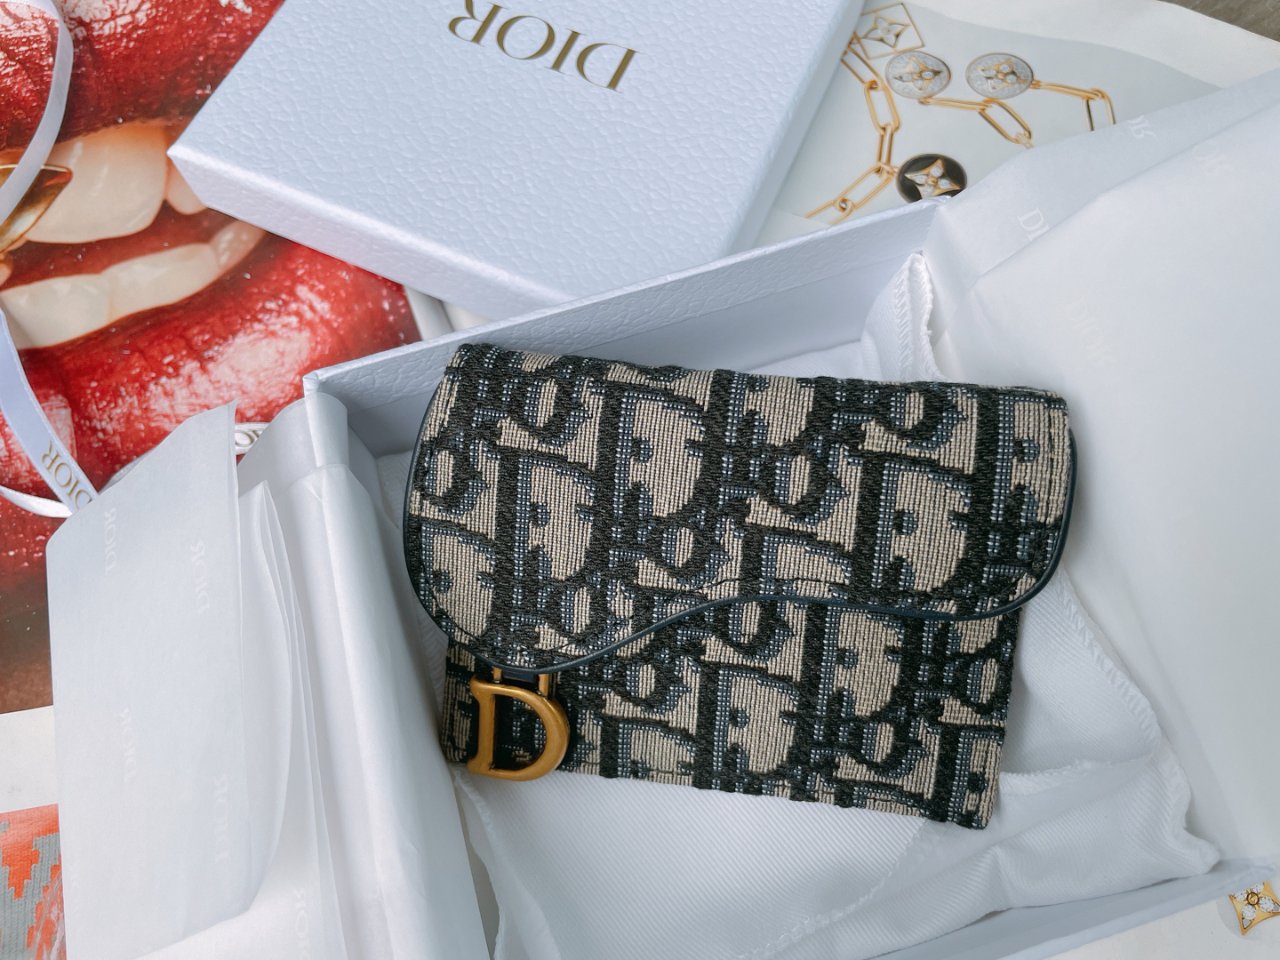 Dior 新款卡包